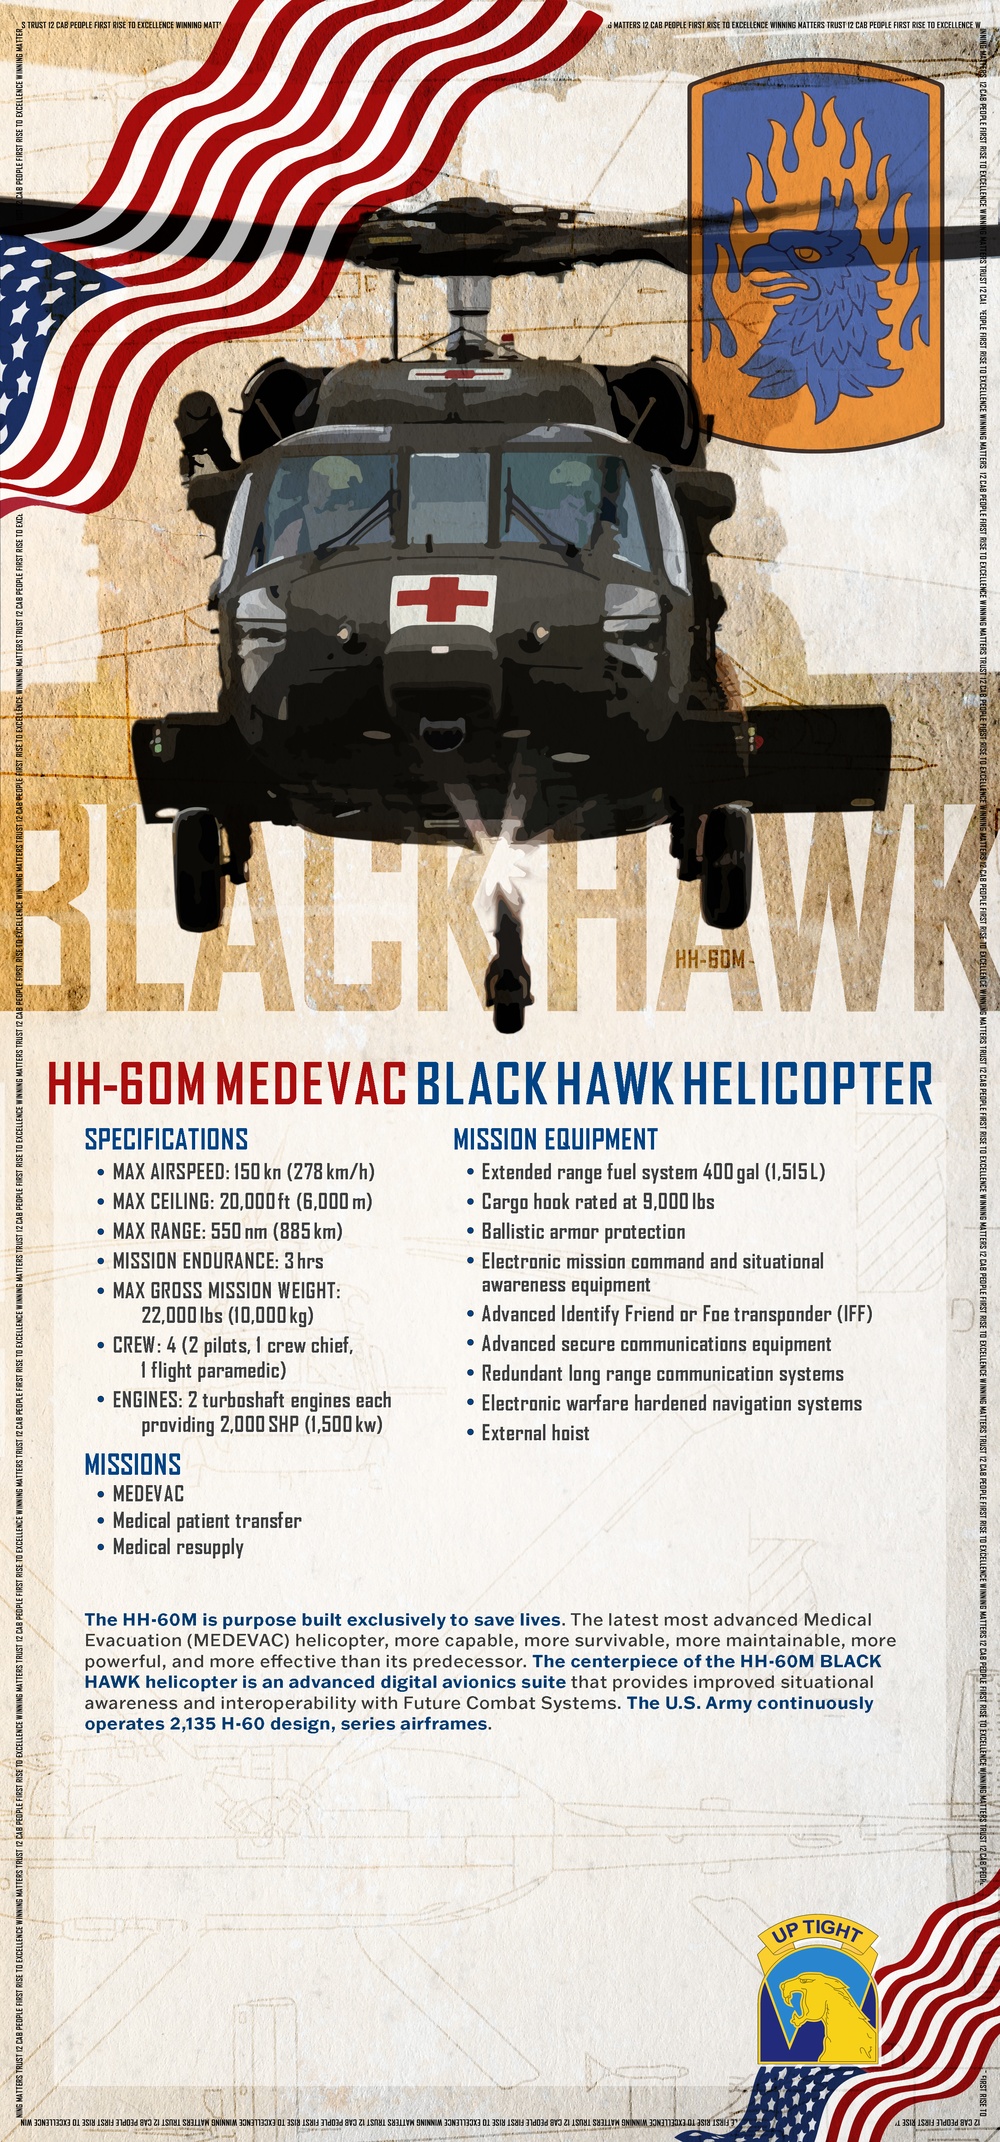 U.S. Army HH-60M MEDEVAC Blackhawk helicopter pop-up display board